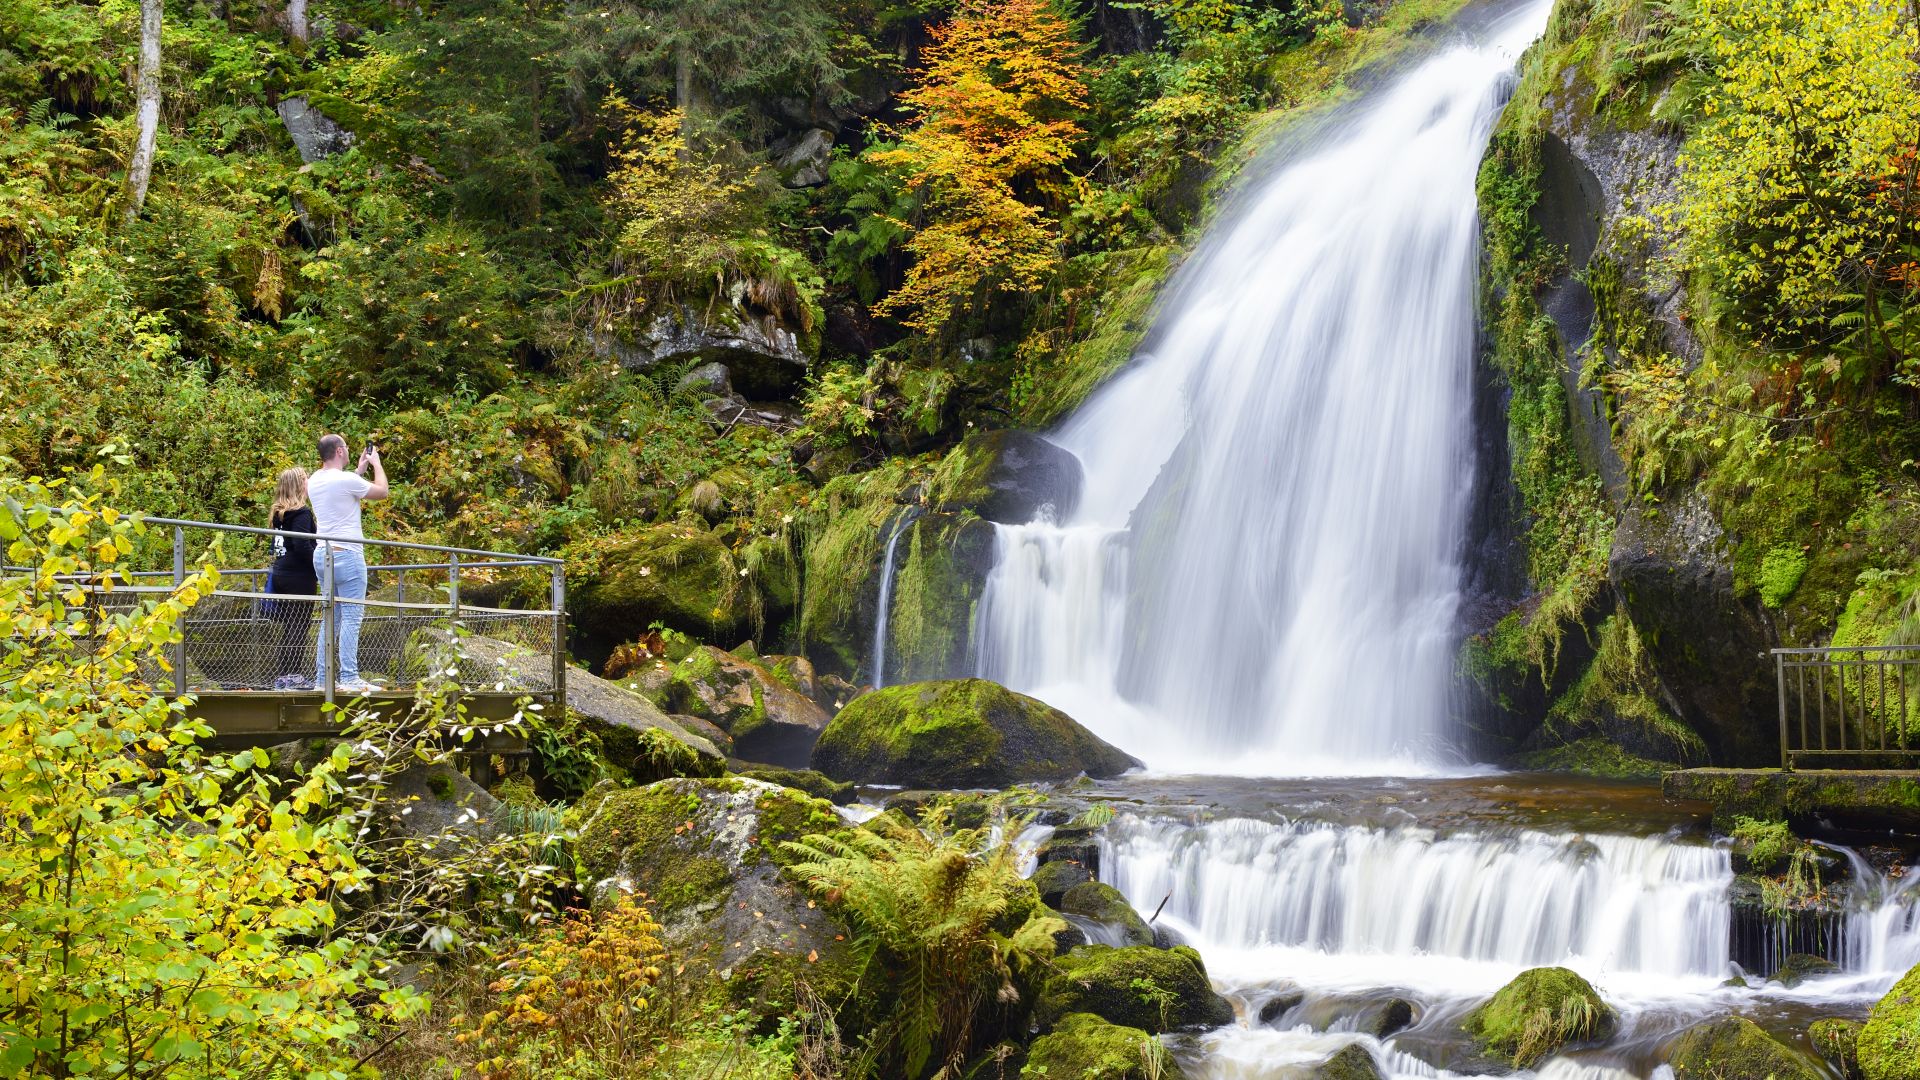 Triberg: Germany's highest waterfalls